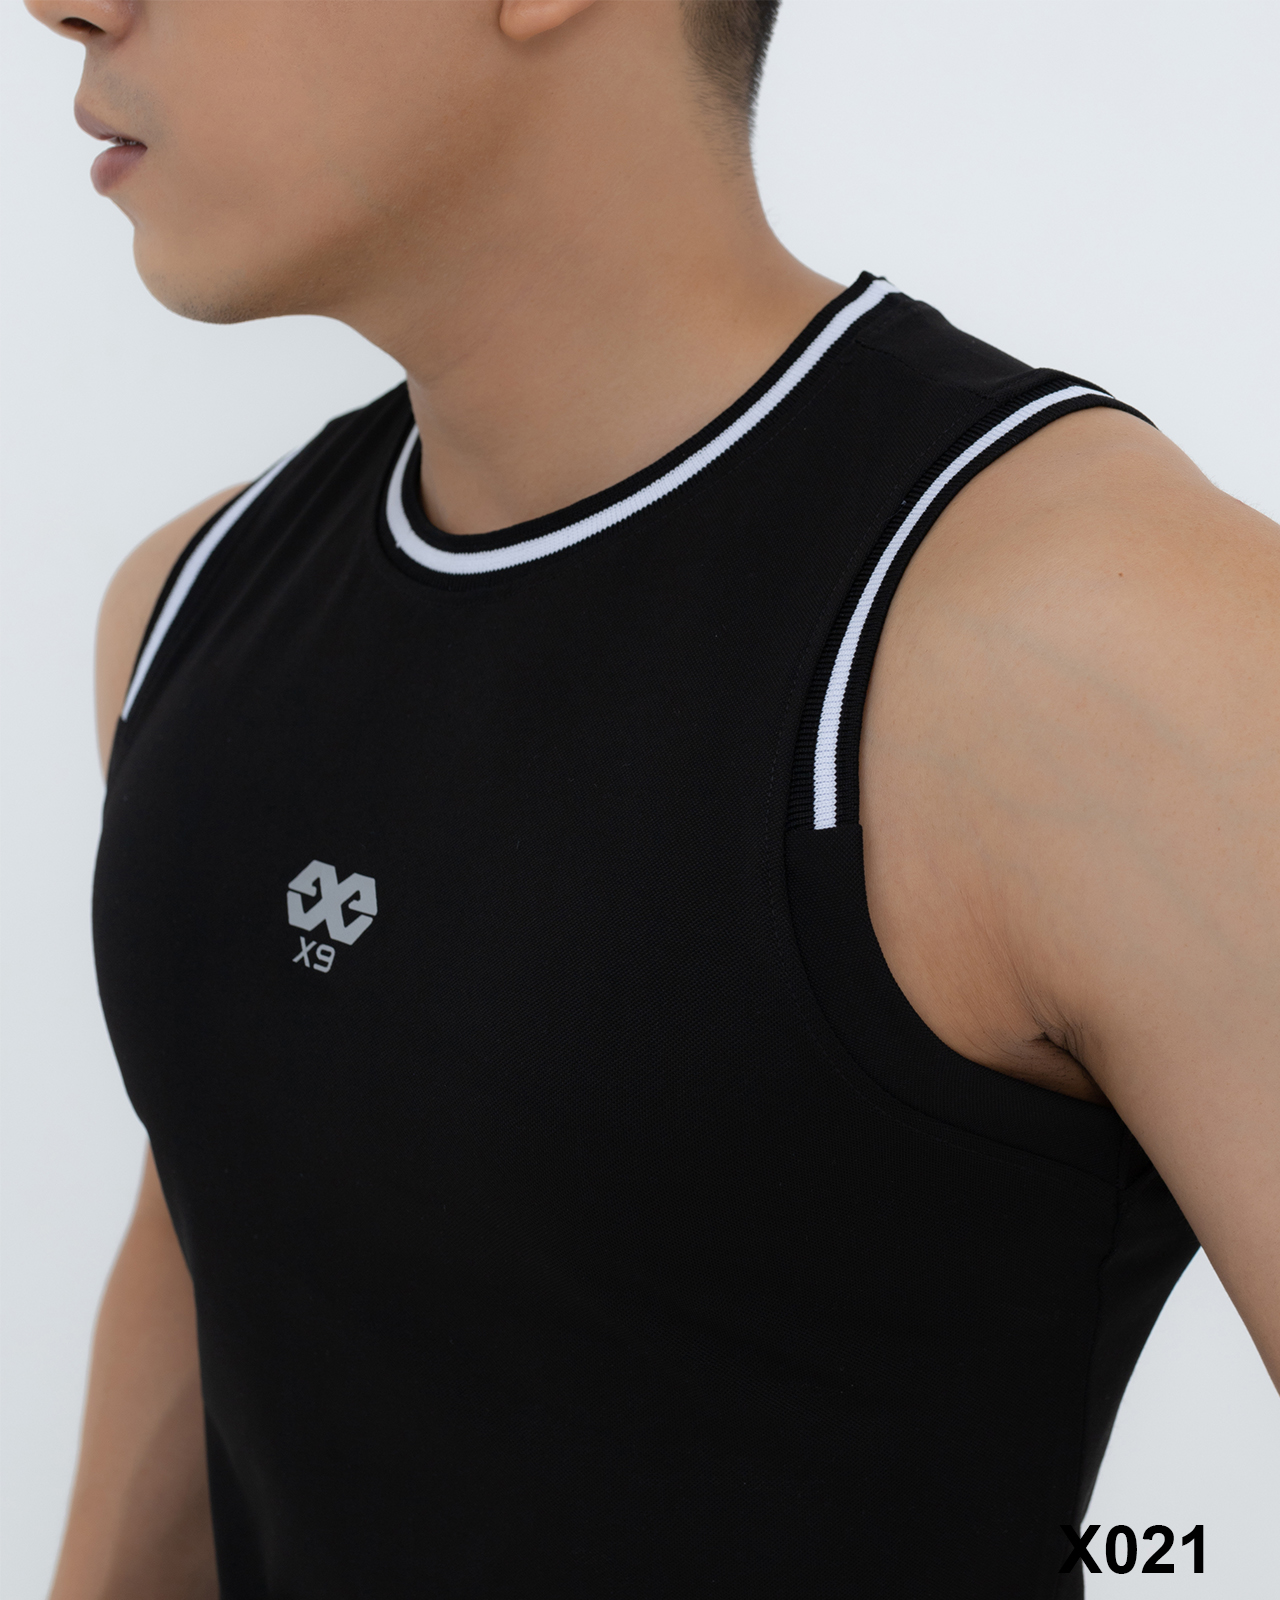 Áo Tanktop 3 Lỗ Nam Bo Viền 1 Nữa - Chạy Bộ Tập Gym Sportswear - X021